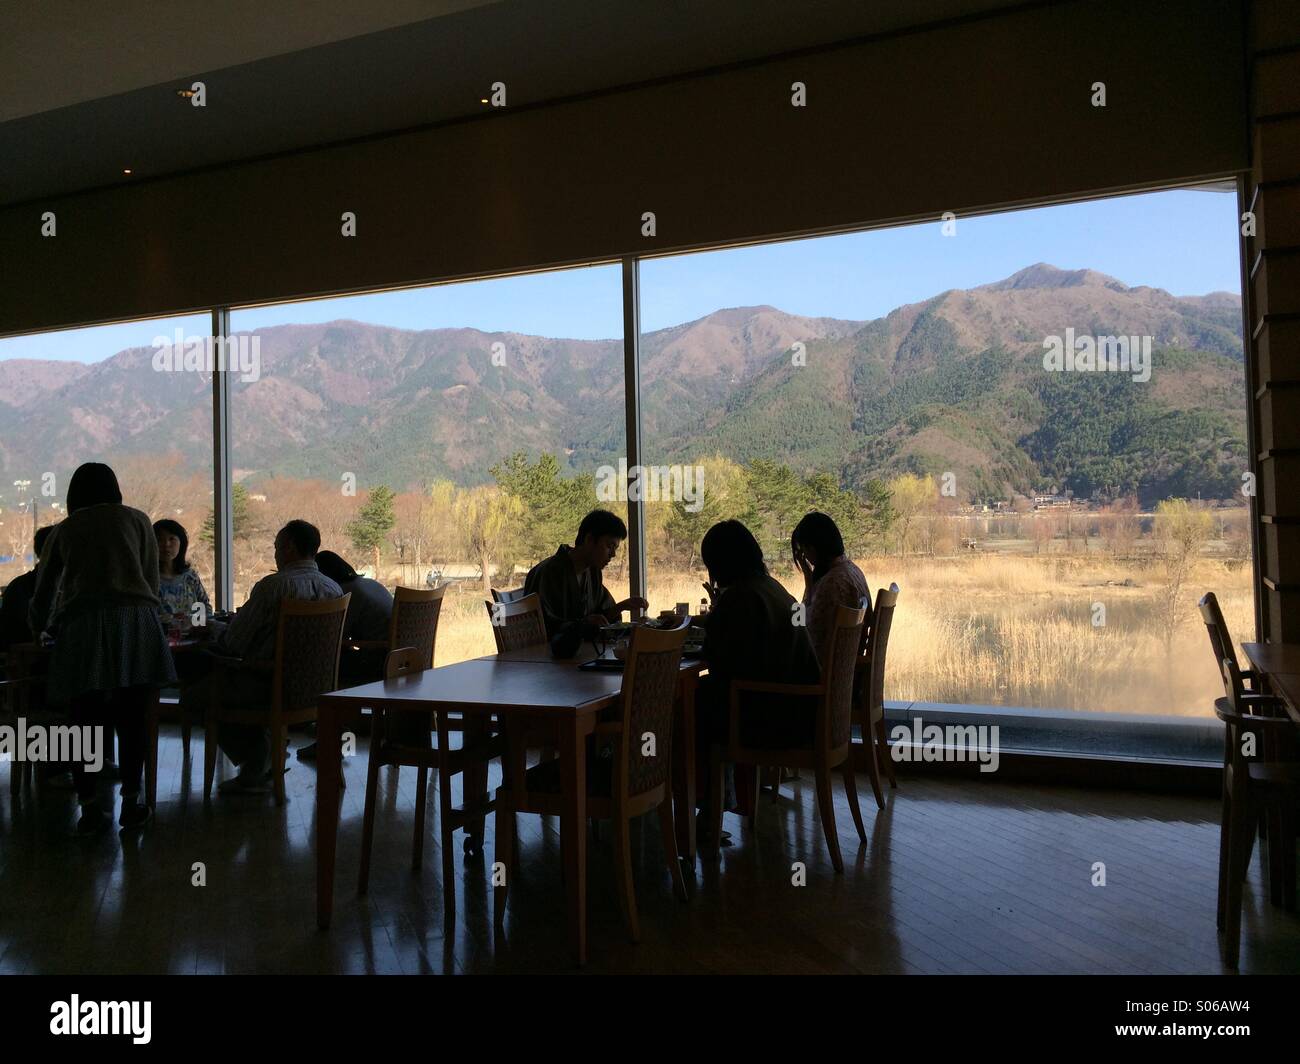 People having breakfast at a restaurant of ryokan hotel in Fujikawaguchiko, Japan with mountain view behind the windows. Spring 2014. Stock Photo